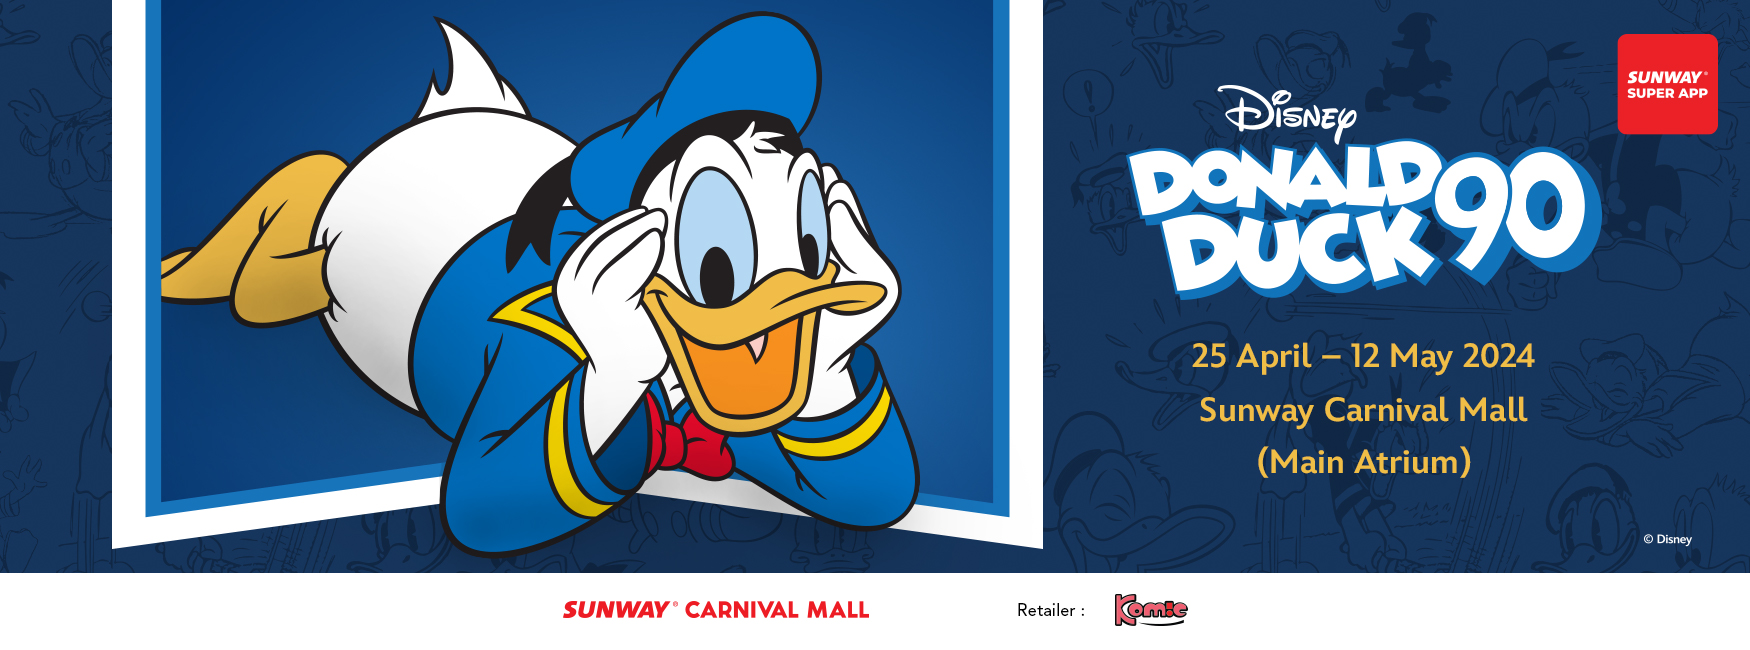 Disney Donald Duck's 90th Anniversary